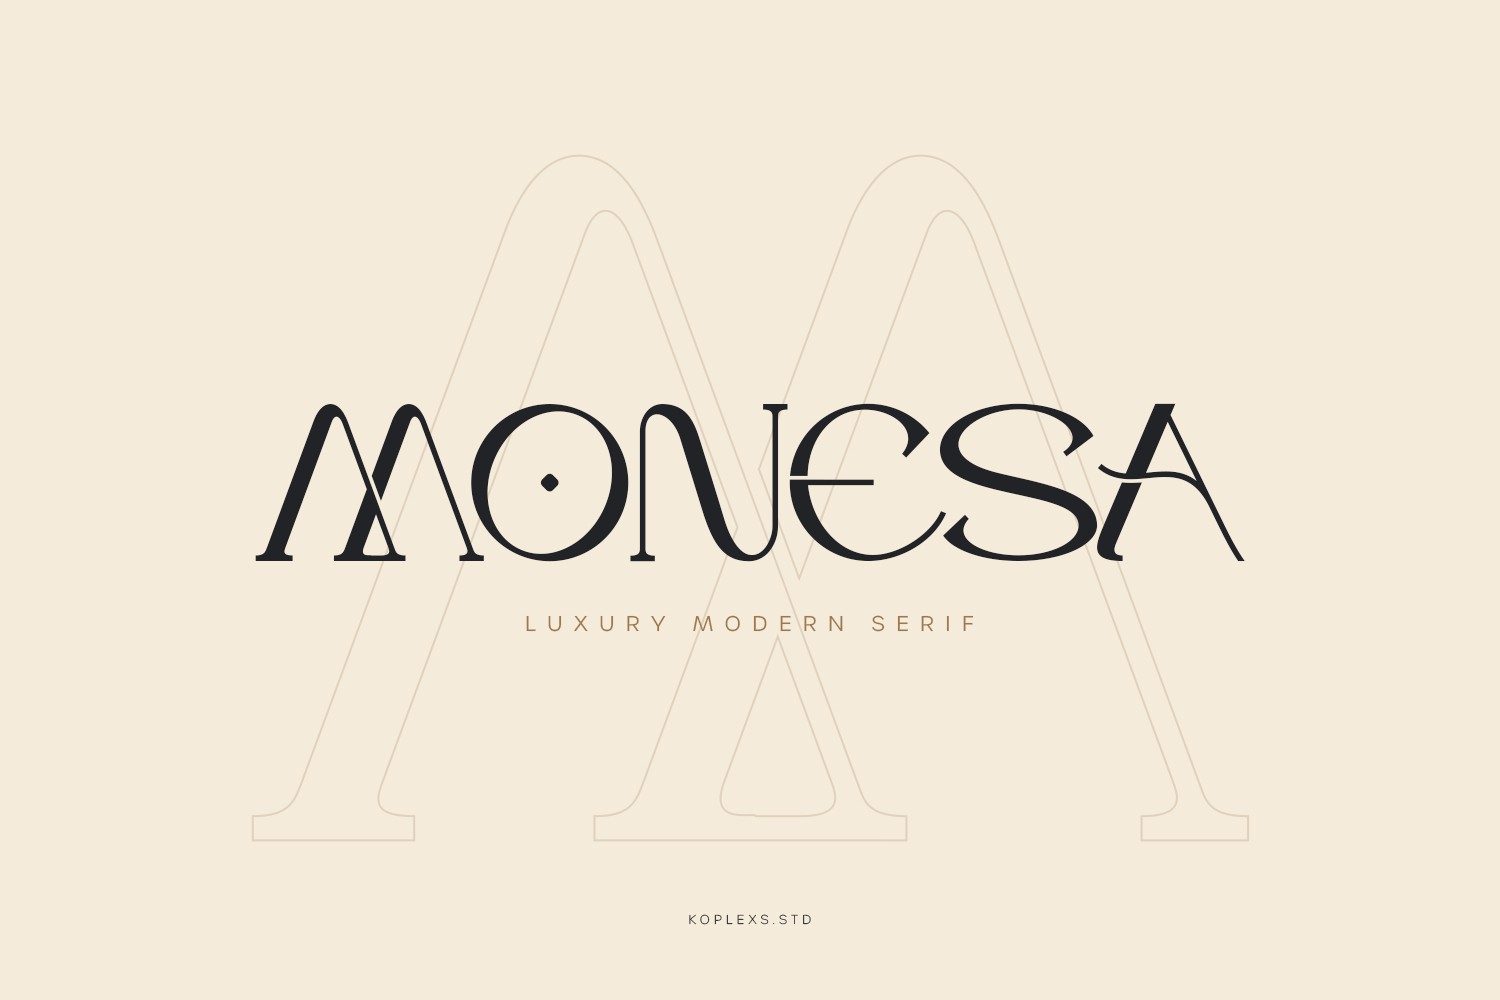 Monesa Free Font